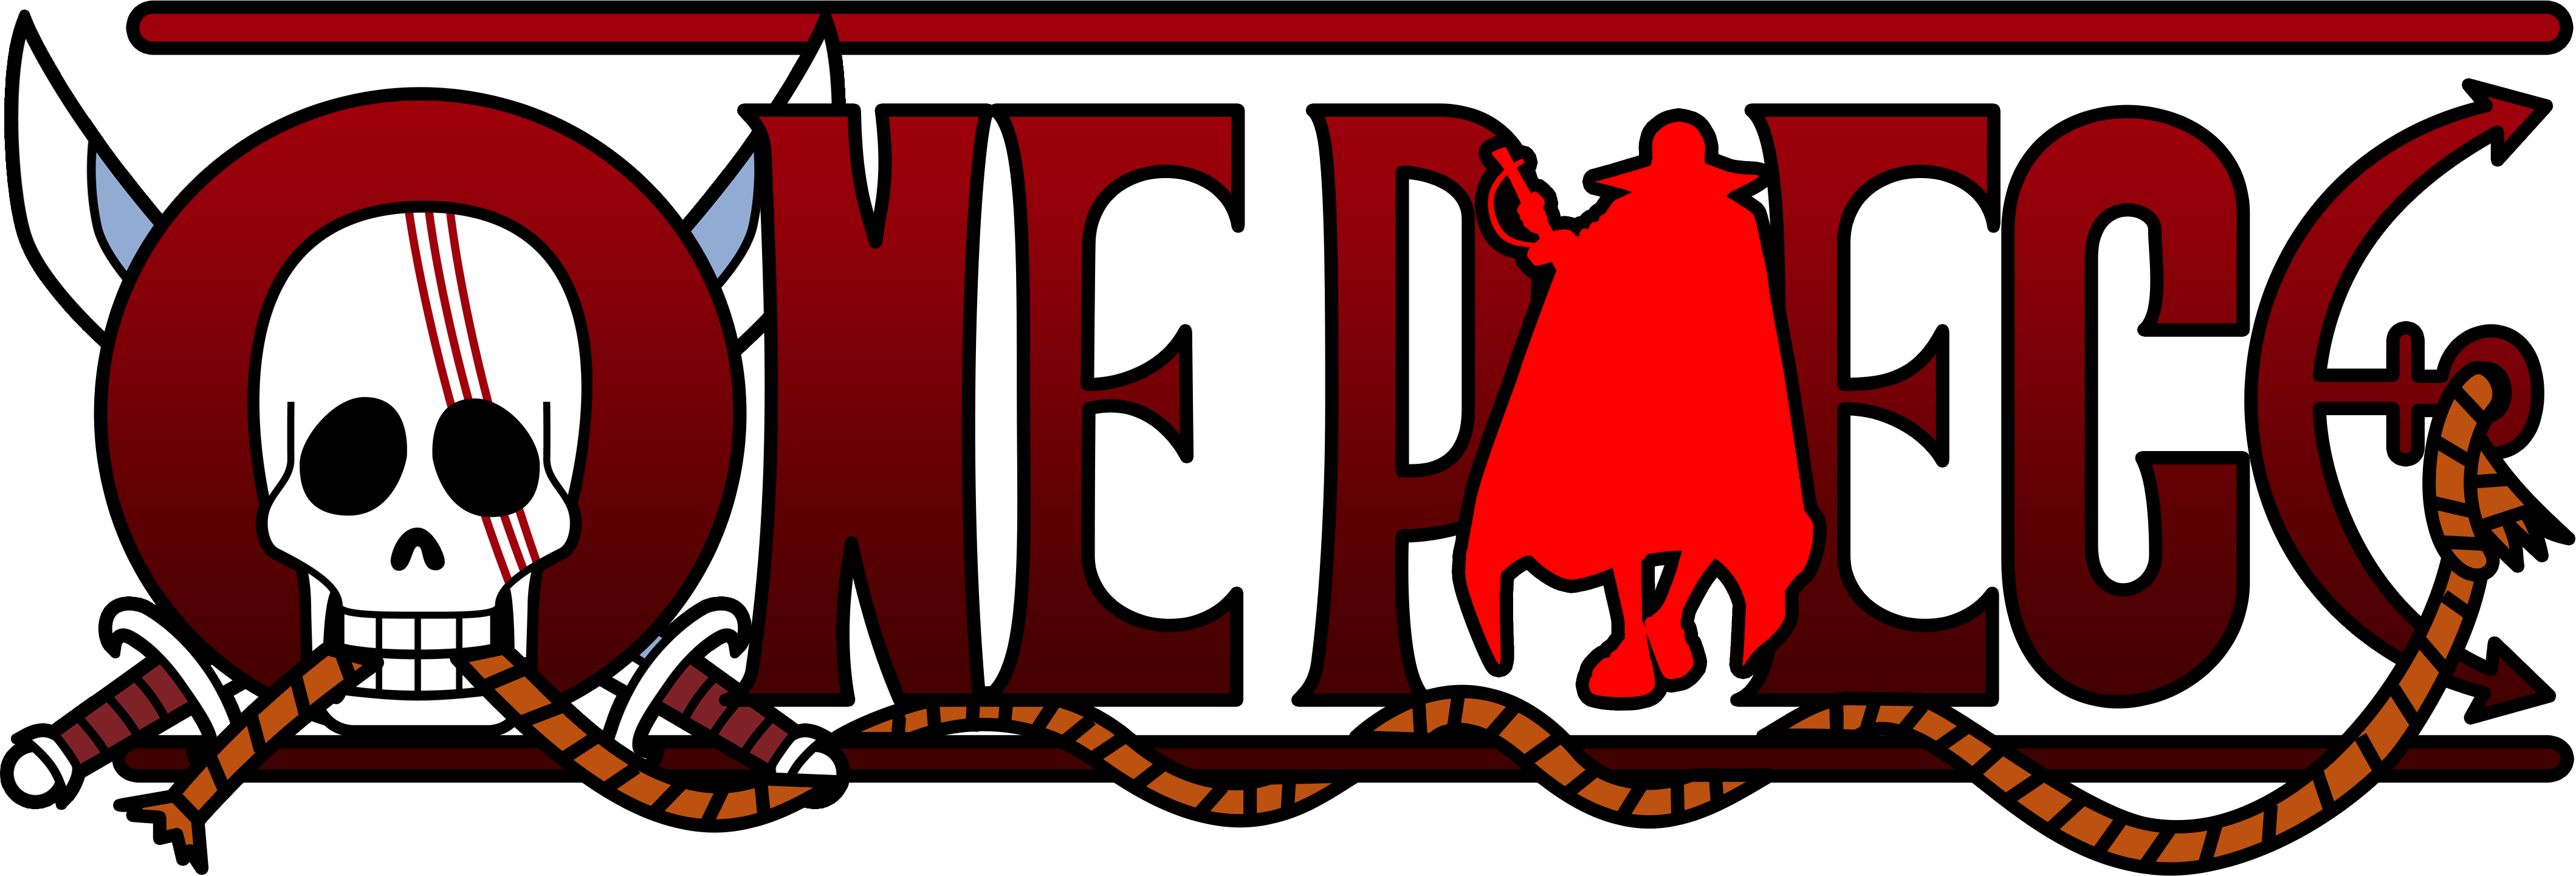 One piece logo #75 - Free Transparent PNG Logos